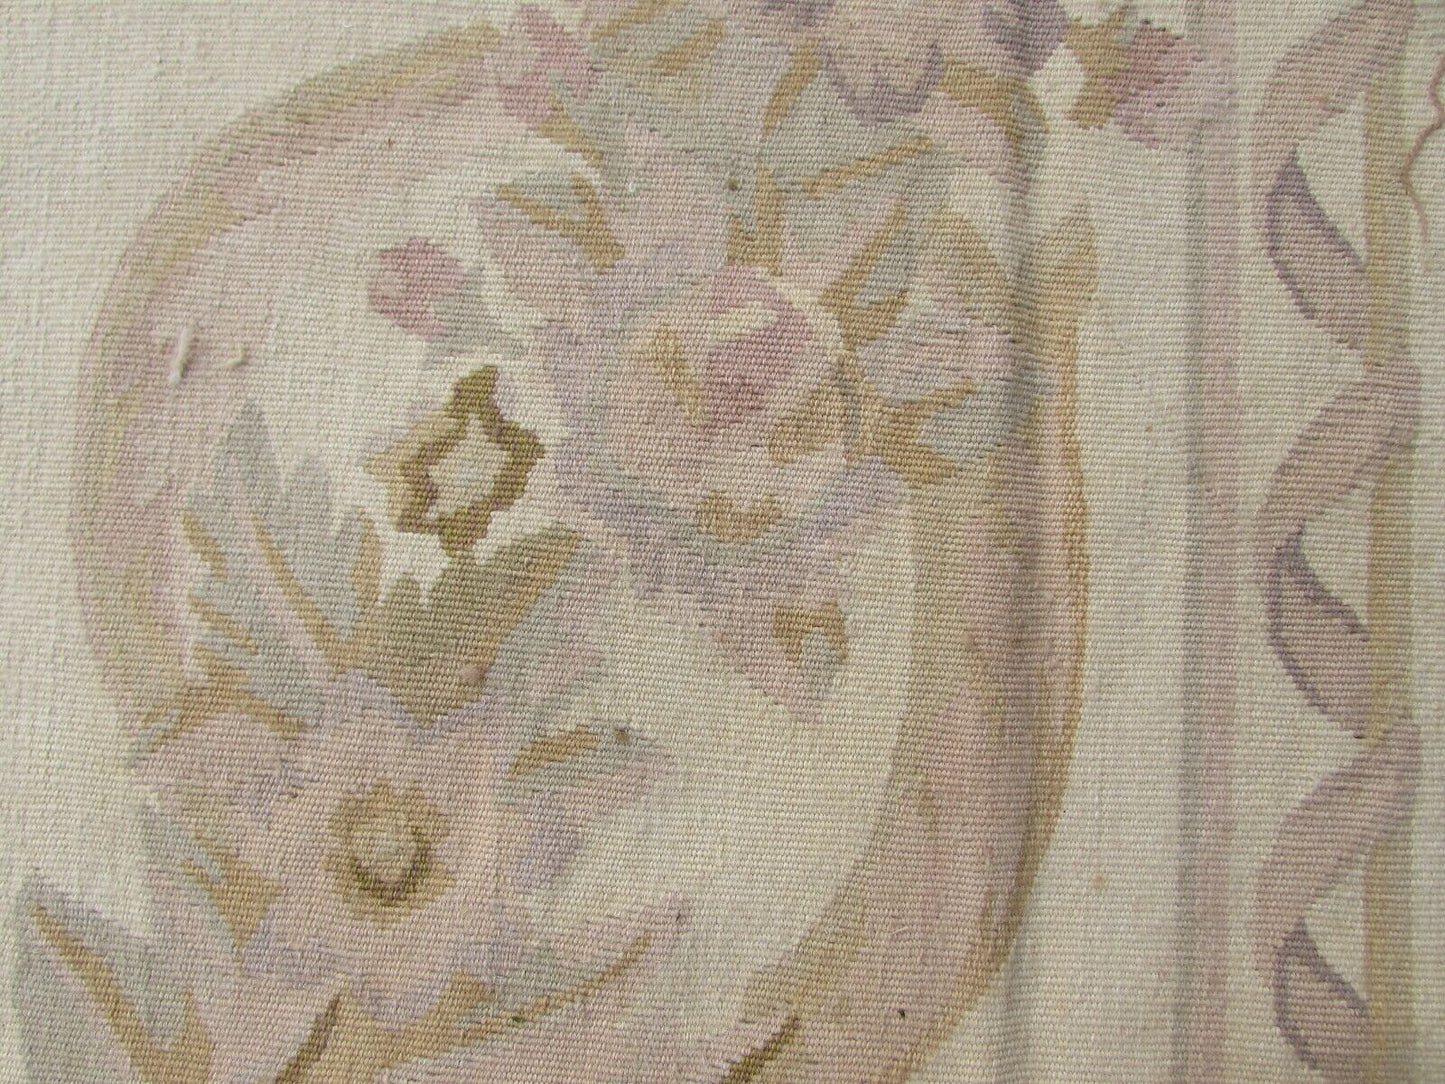 Handmade vintage French Aubusson rug 9' x 12.2' (276cm x 373cm) 1970s - 1Q13